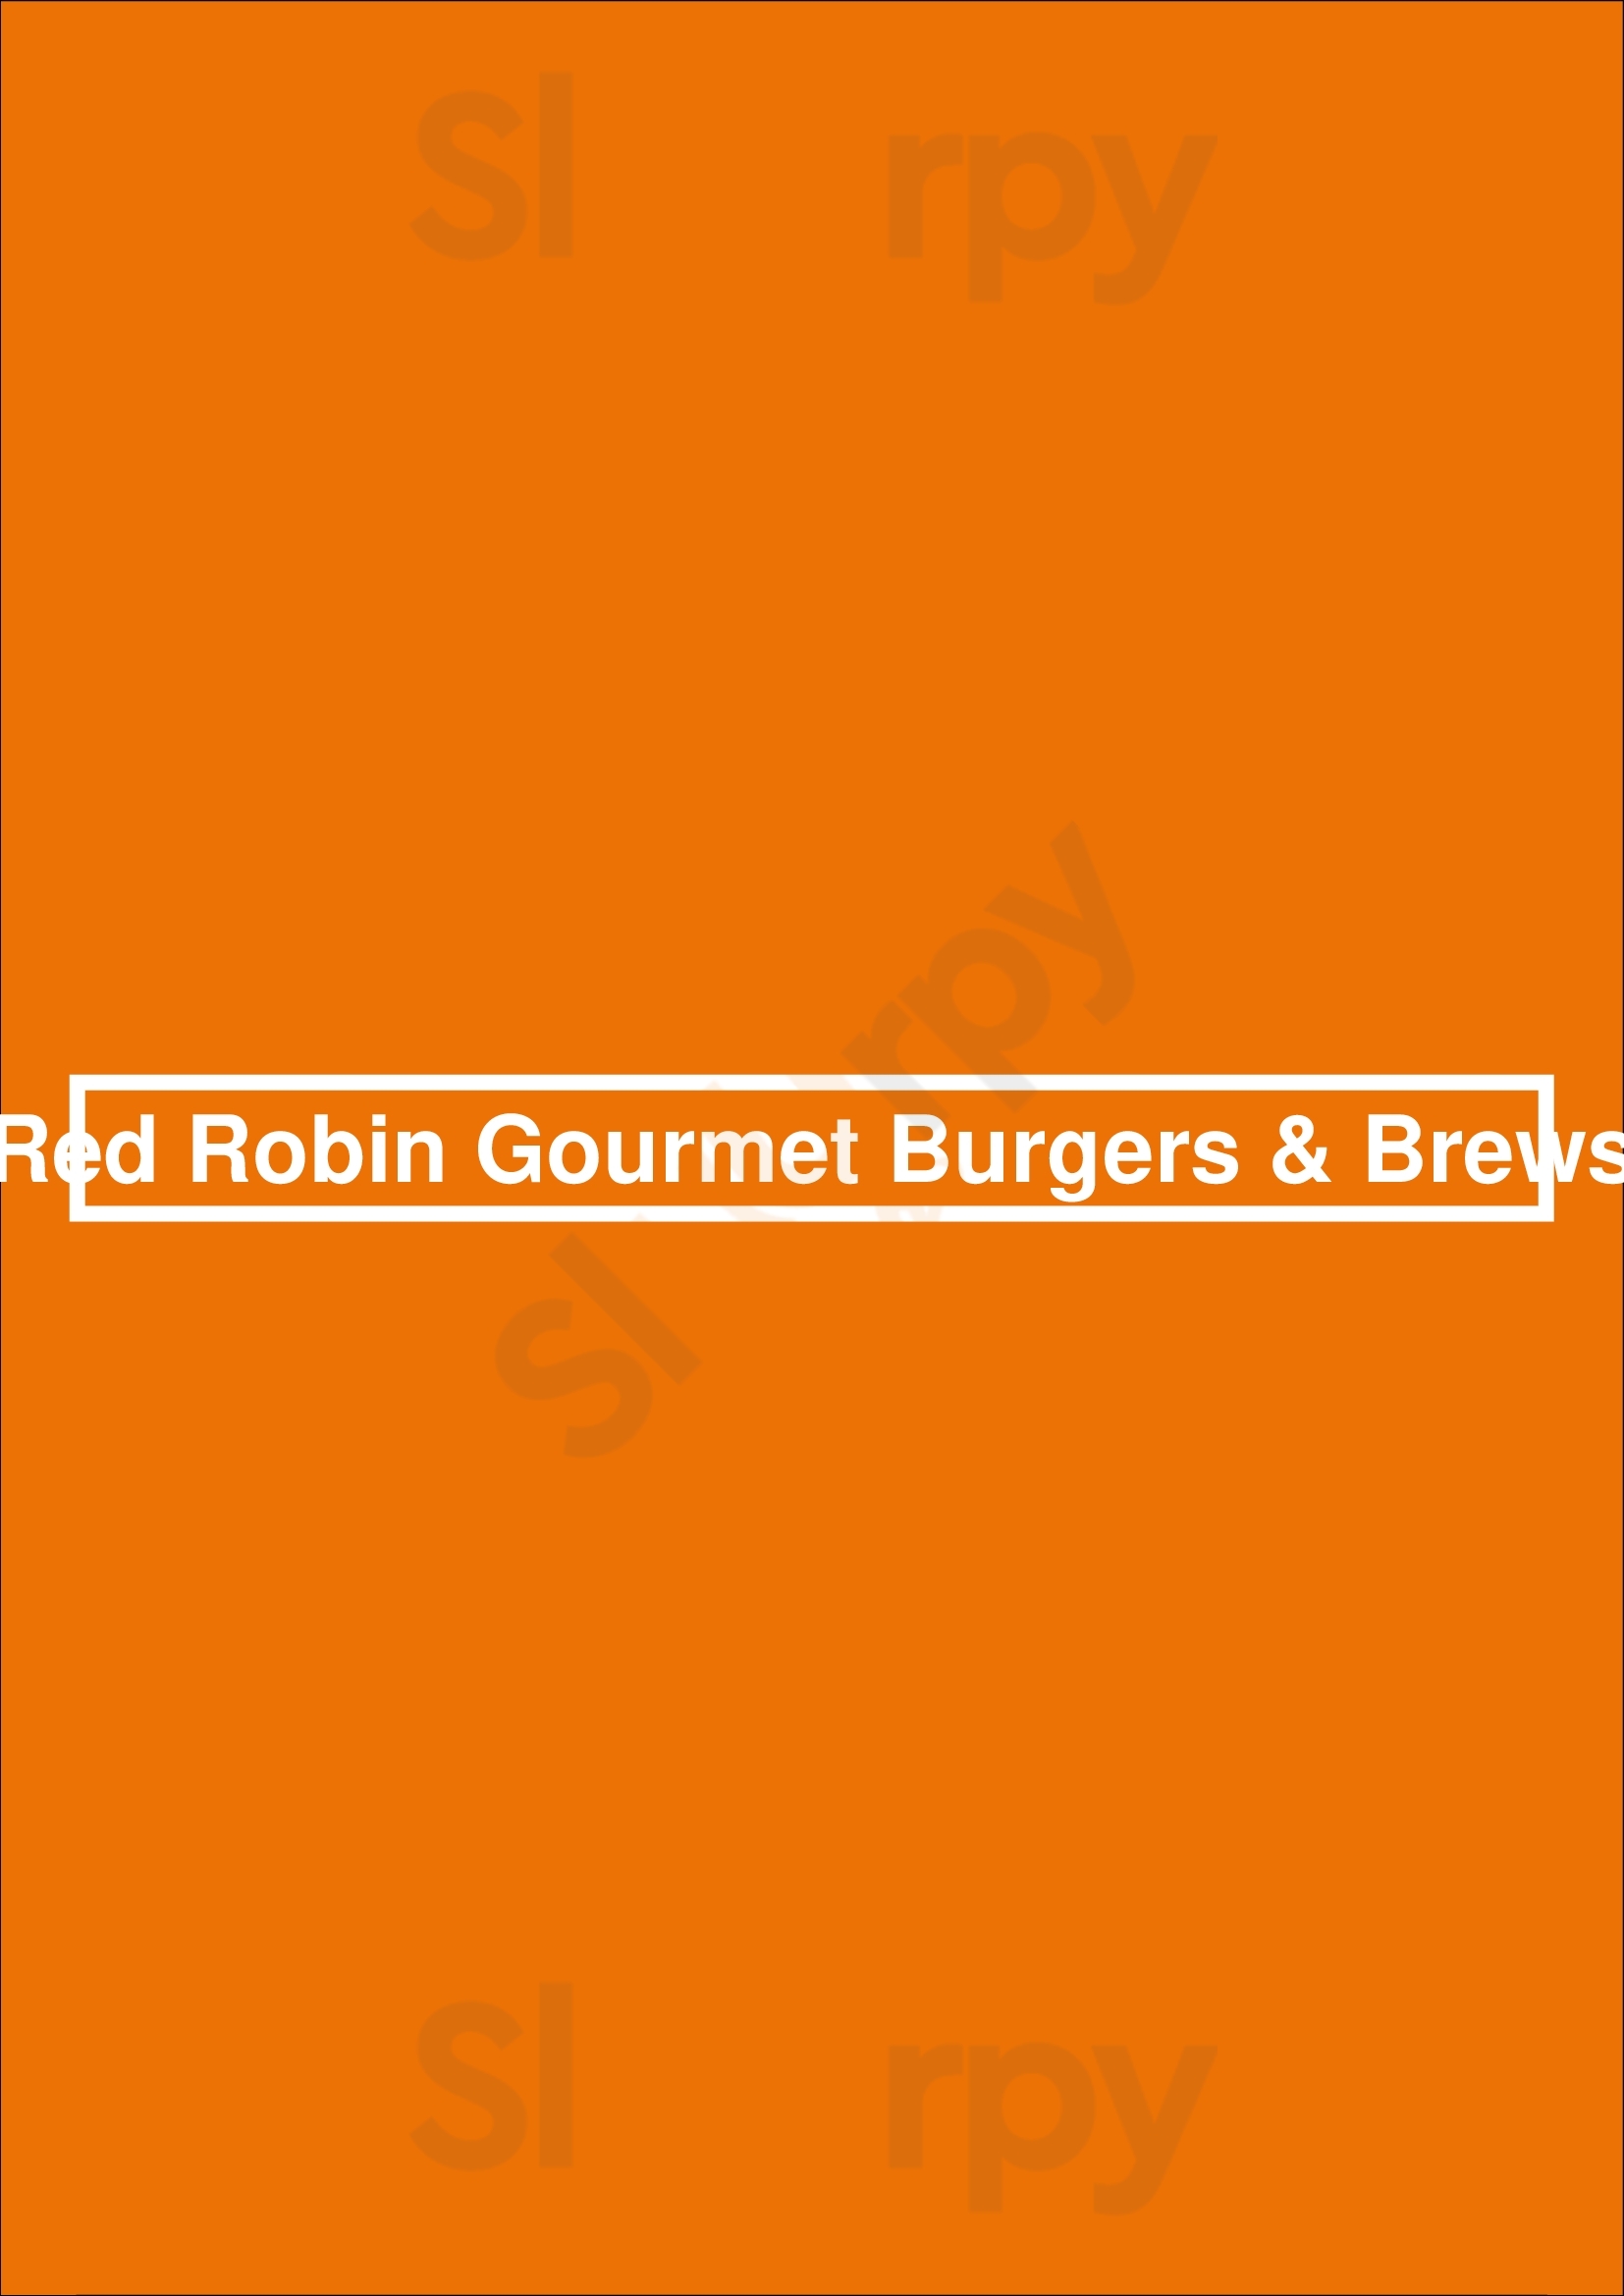 Red Robin Gourmet Burgers & Brews Columbia Menu - 1